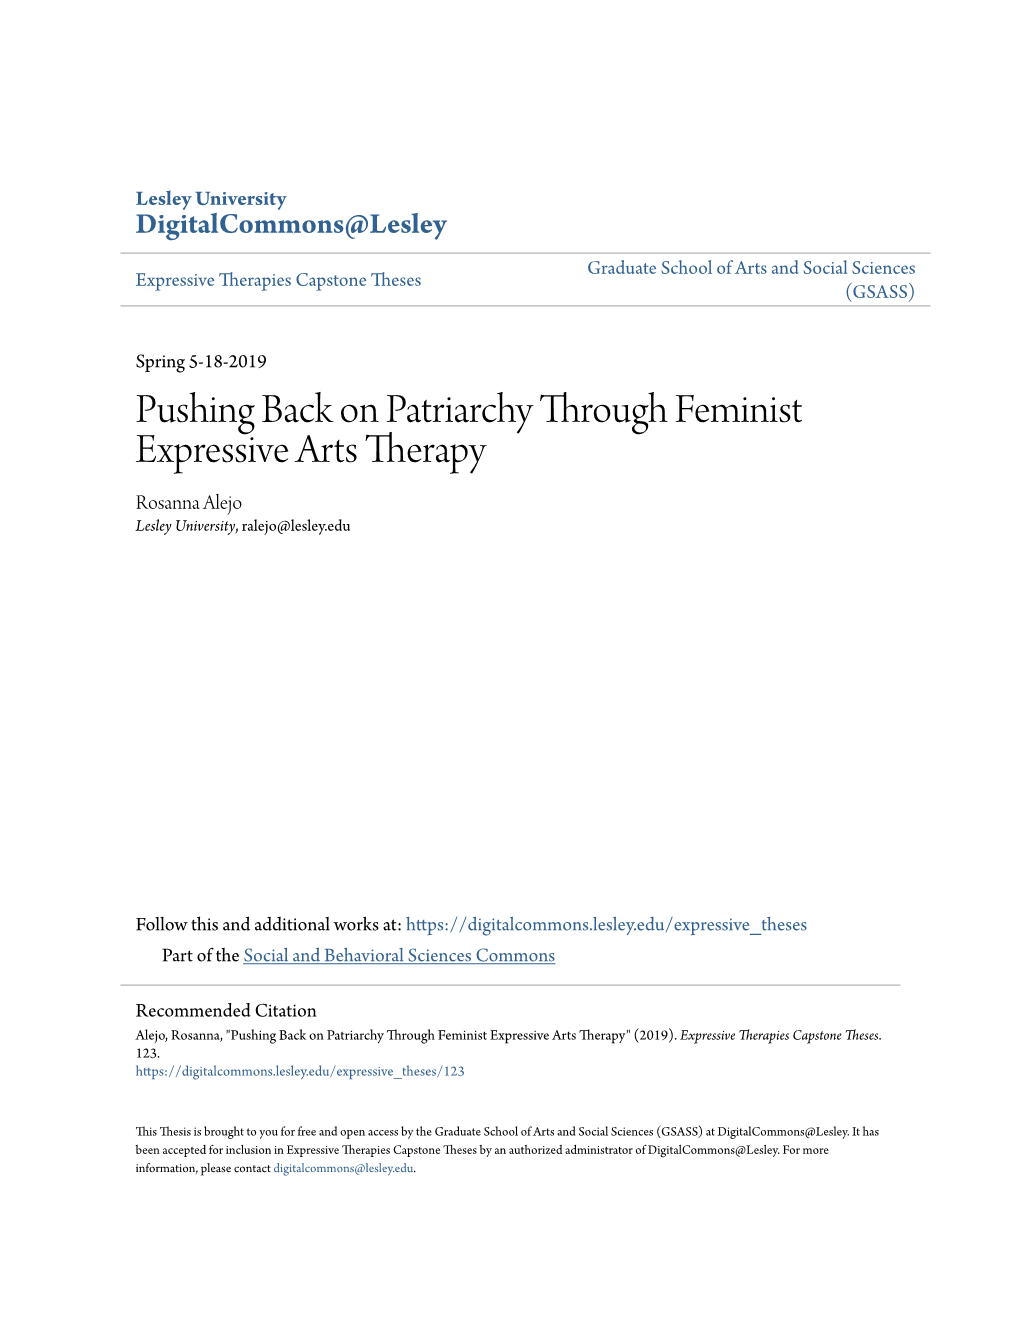 Pushing Back on Patriarchy Through Feminist Expressive Arts Therapy Rosanna Alejo Lesley University, Ralejo@Lesley.Edu